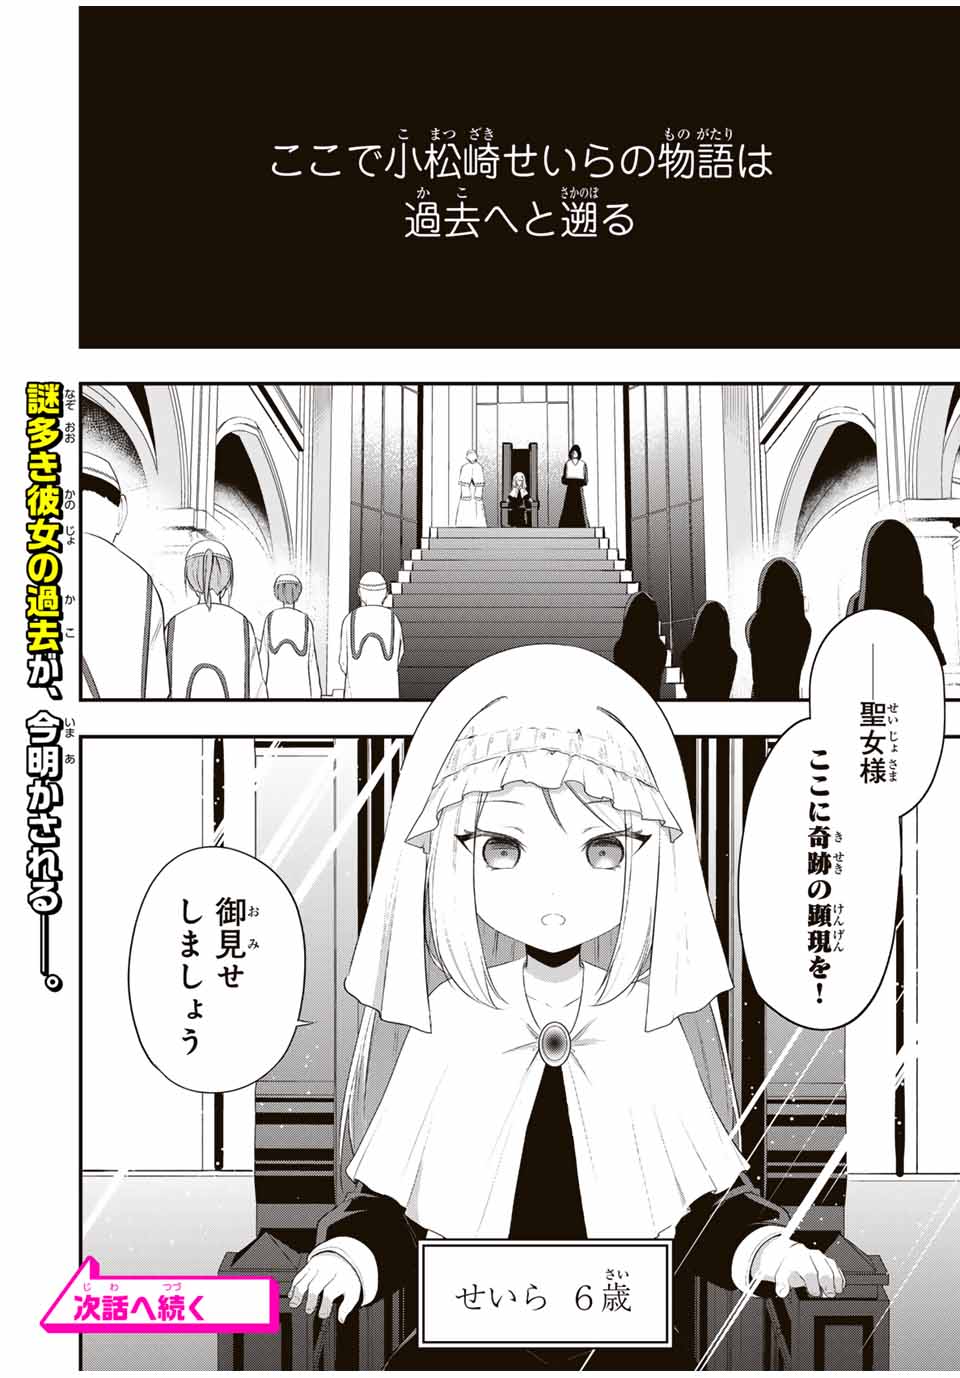 Heroine wa xx Okasegitai - Chapter 14 - Page 22